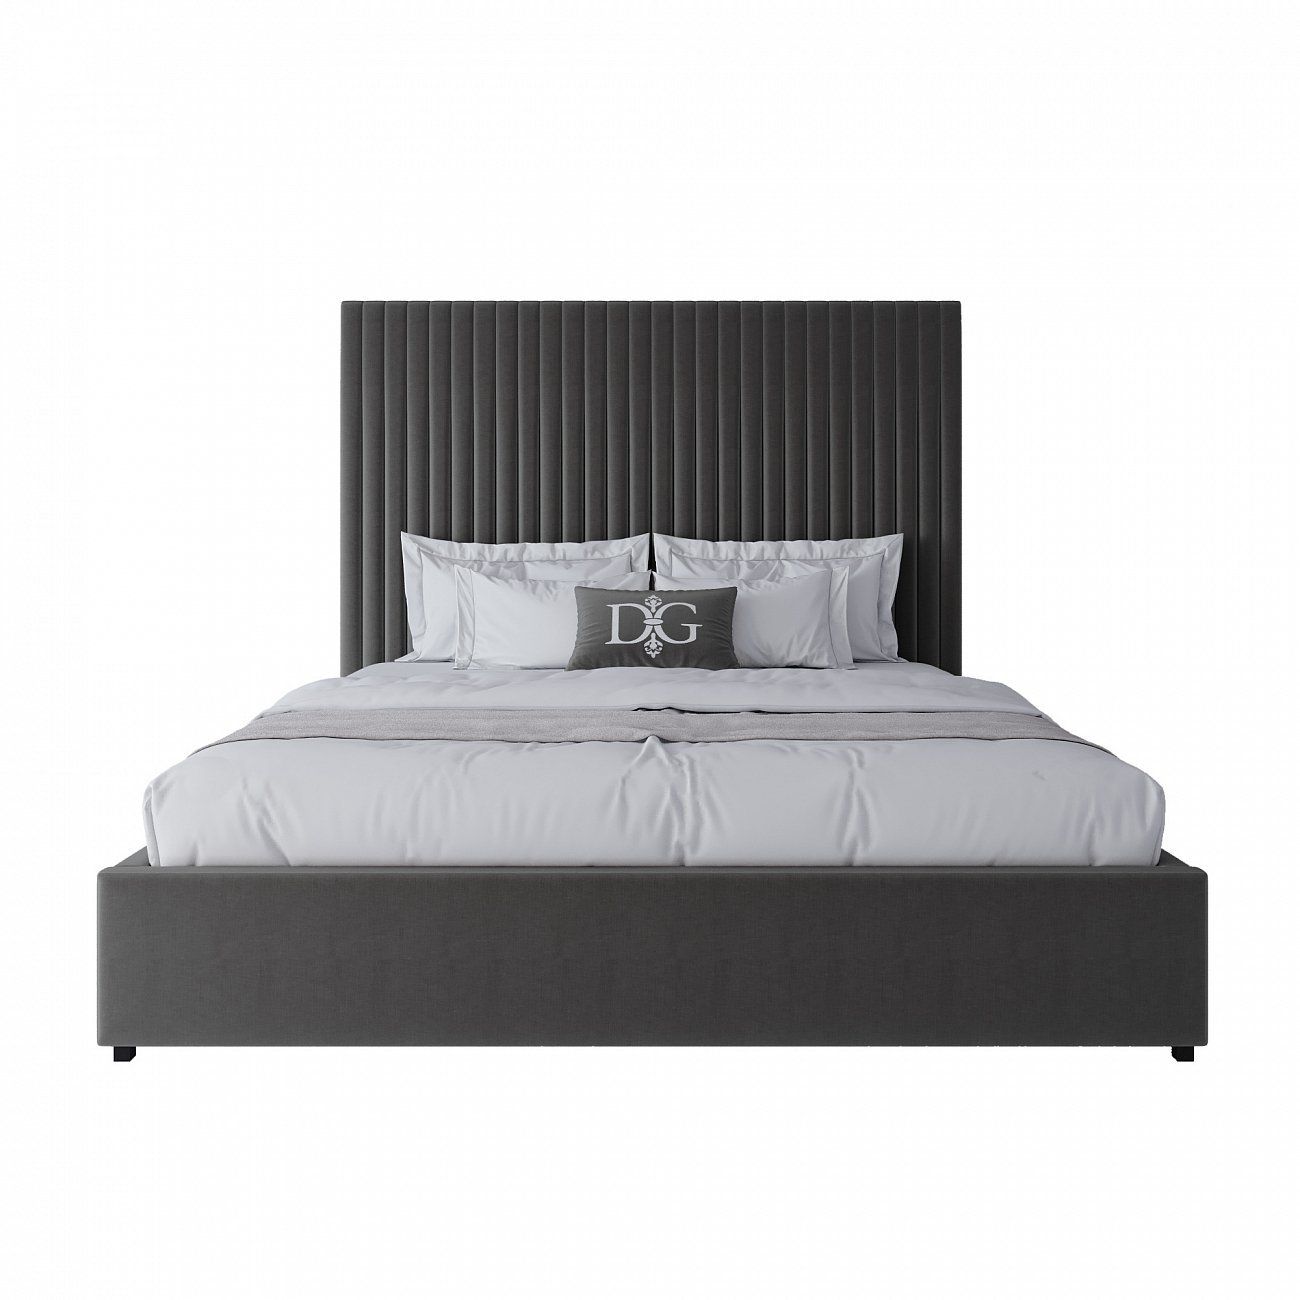 Double bed 180x200 cm dark gray Mora